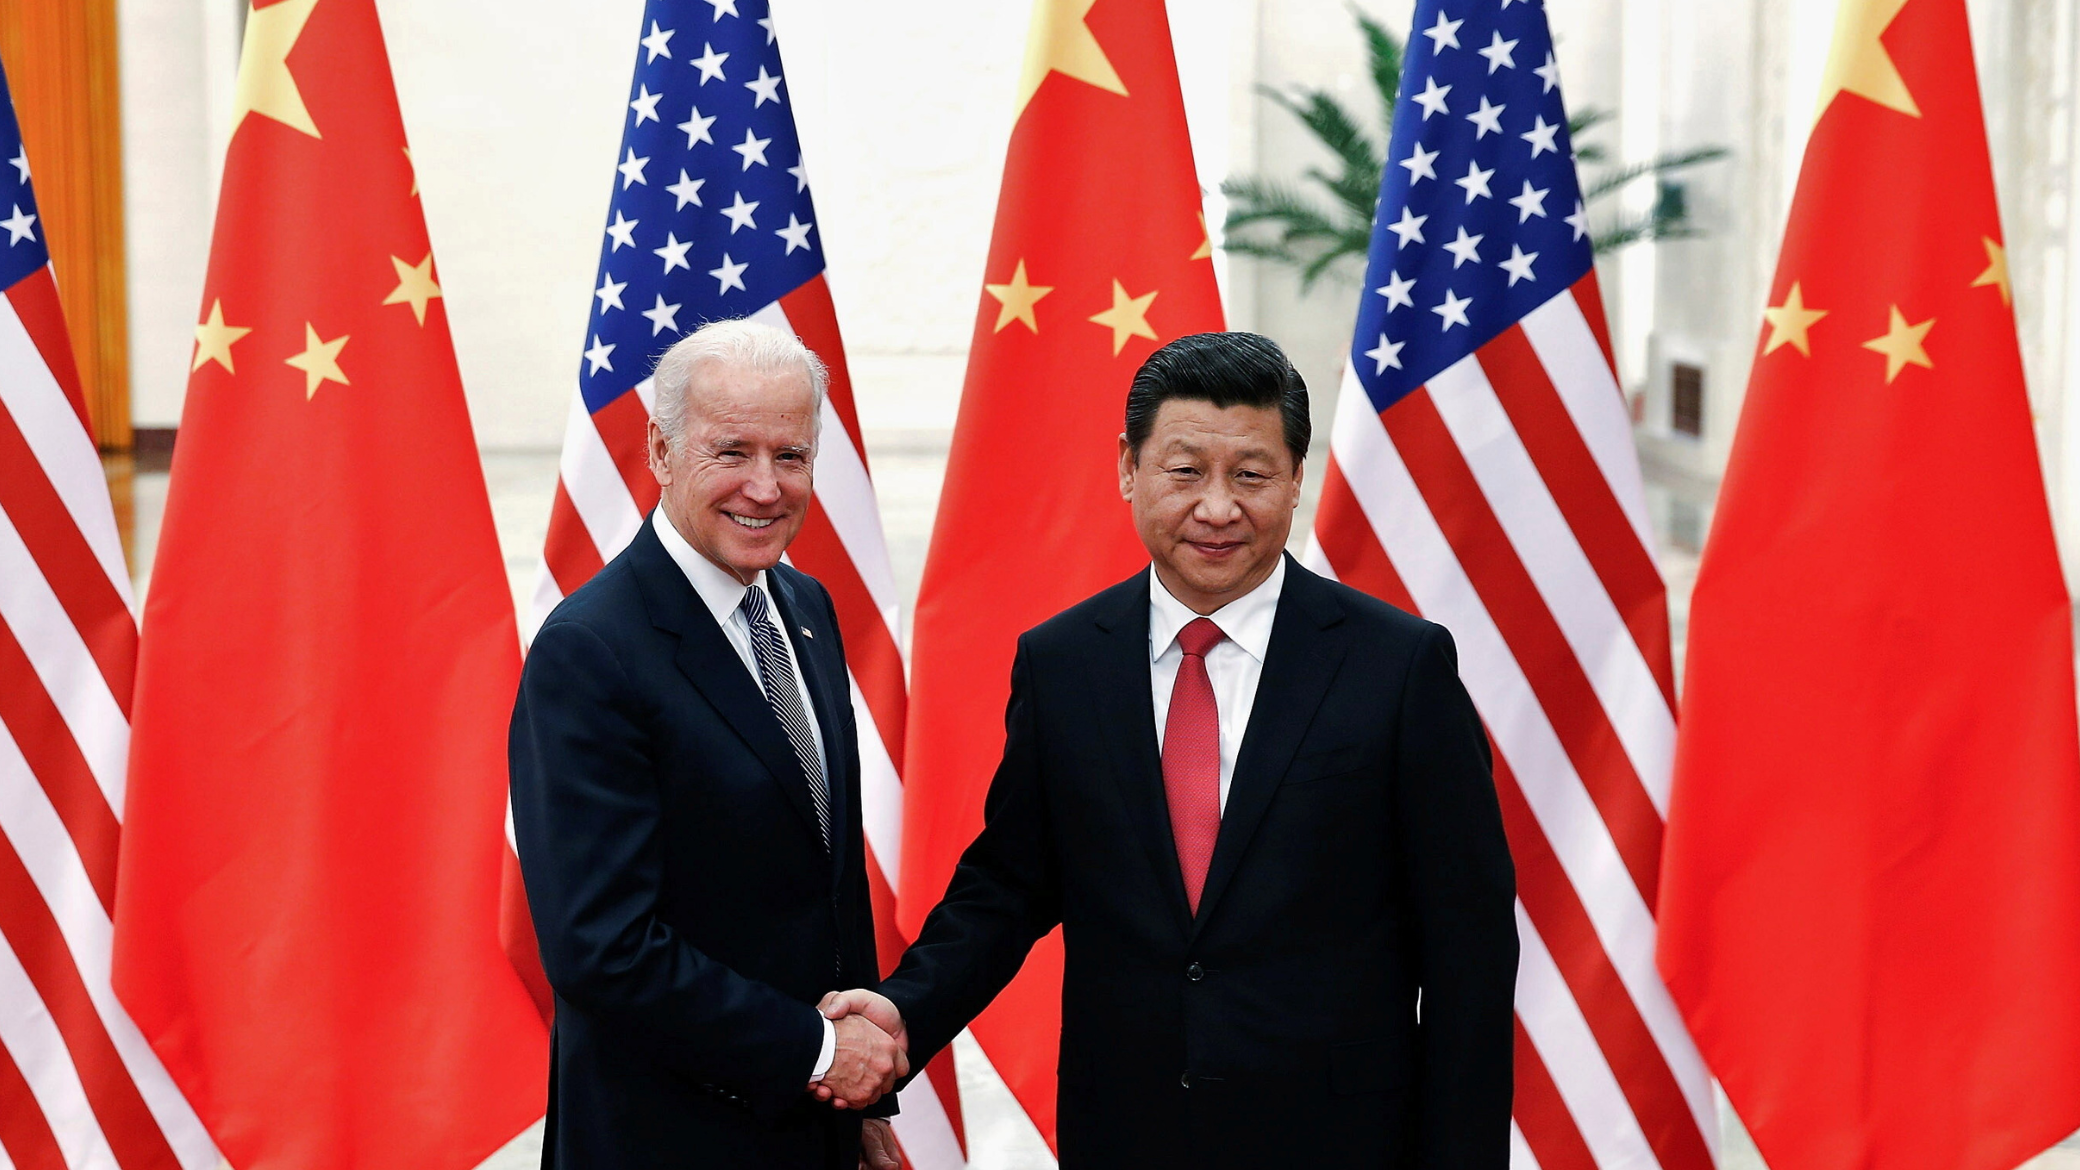 PacNet #64 – The Biden-Xi summit: Not revolutionary, but still necessary